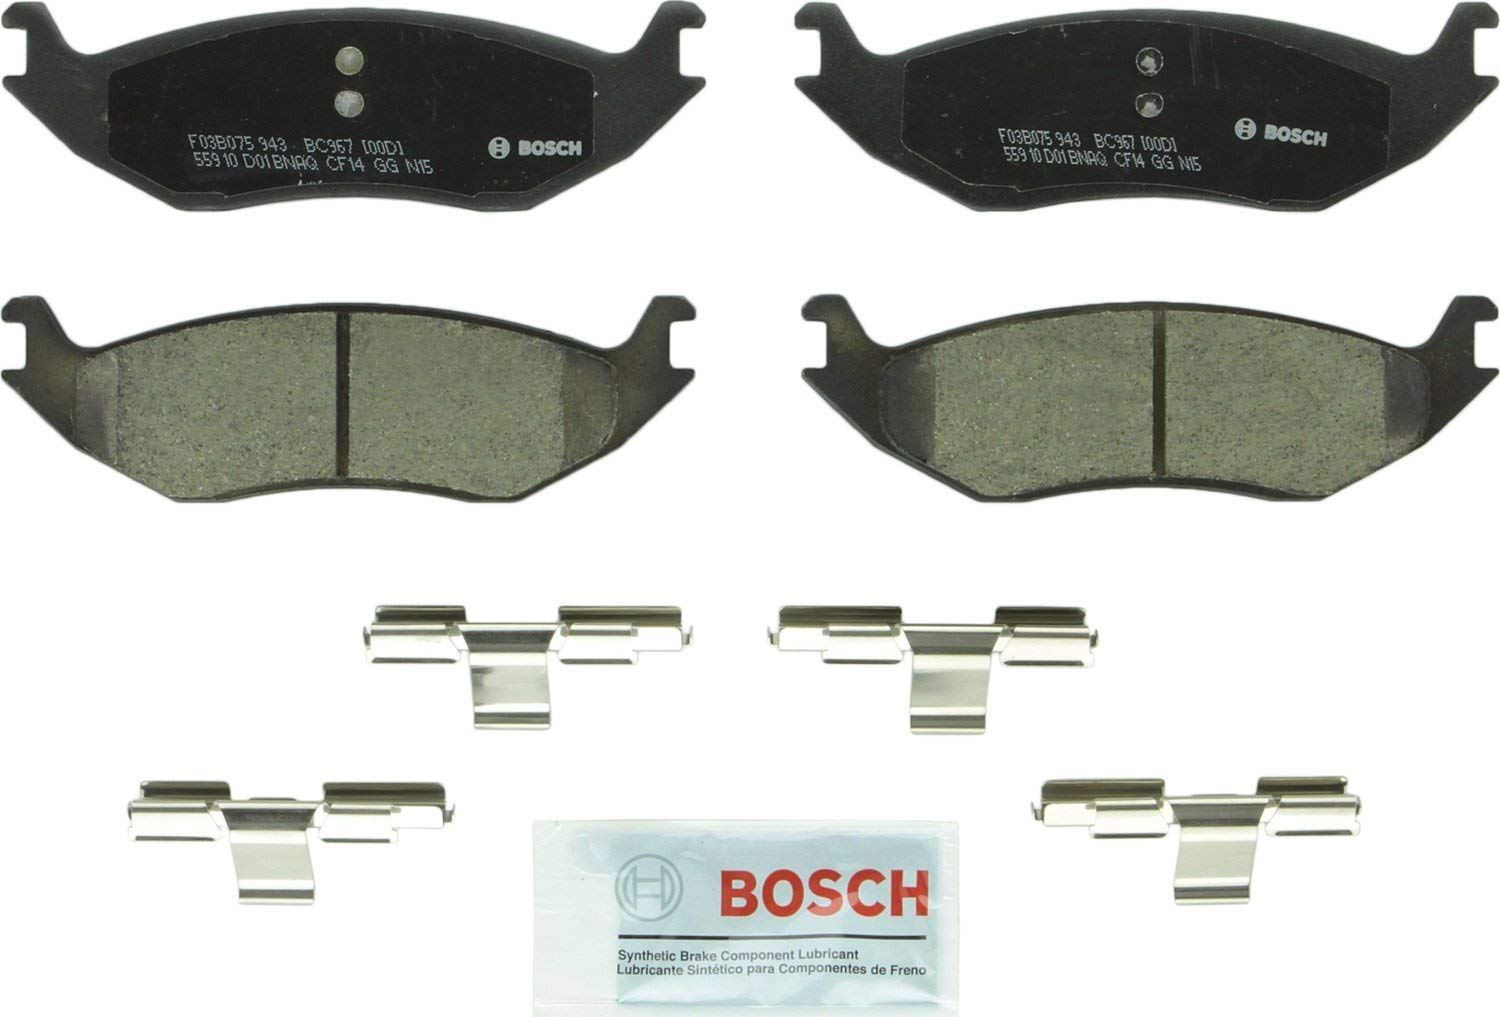 Bosch BC967 QuietCast Premium Ceramic Disc Brake Pad Set For: Chrysler Aspen; Dodge Ram 1500, Durango, Ram 1500 Van; Ram 1500, Rear